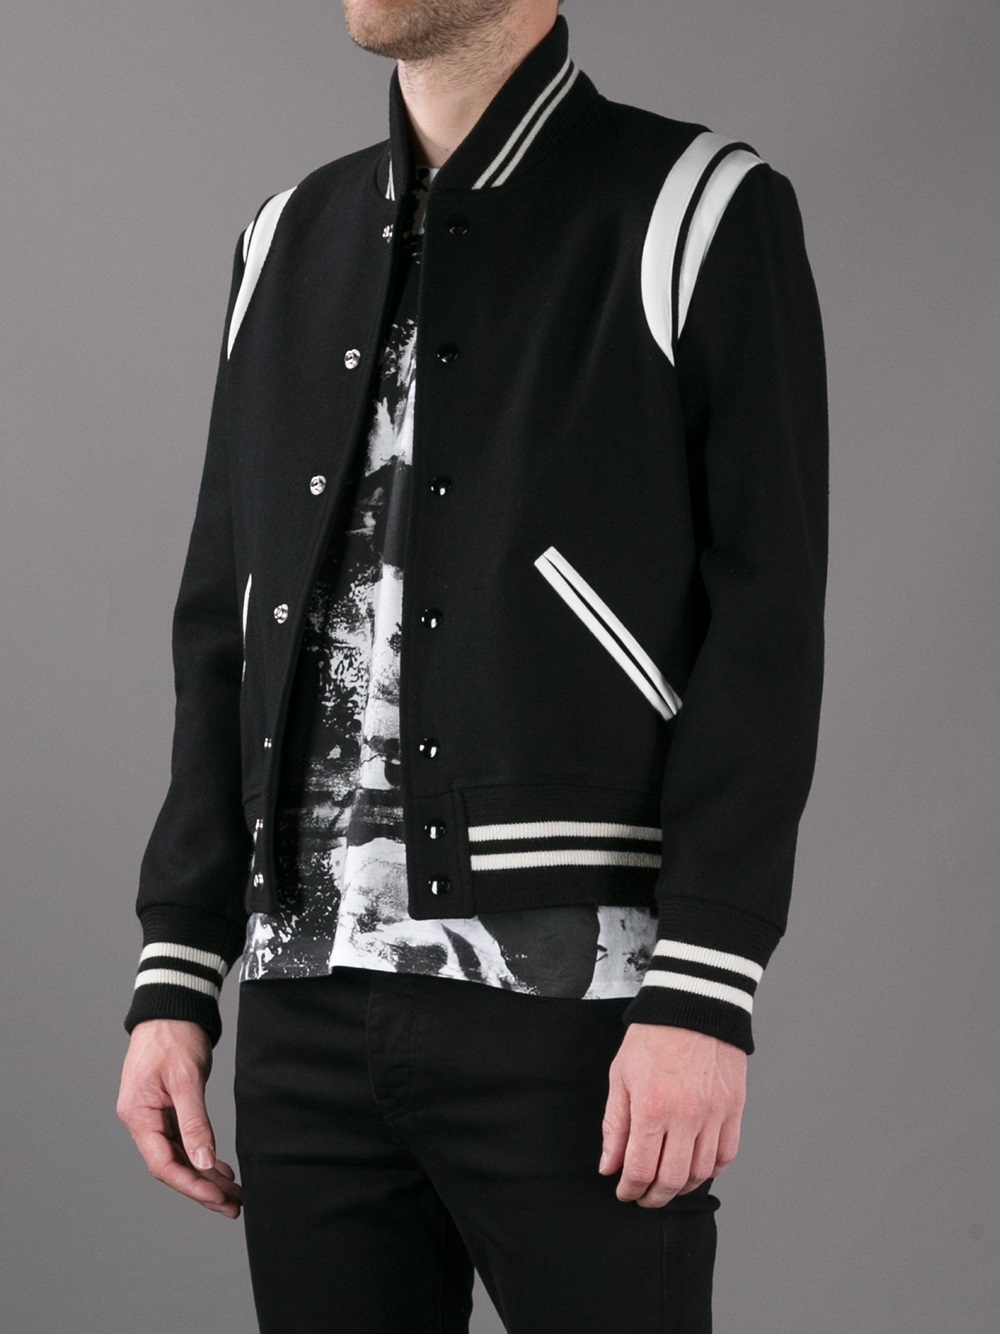 Lyst - Saint Laurent Varsity Jacket in Black for Men